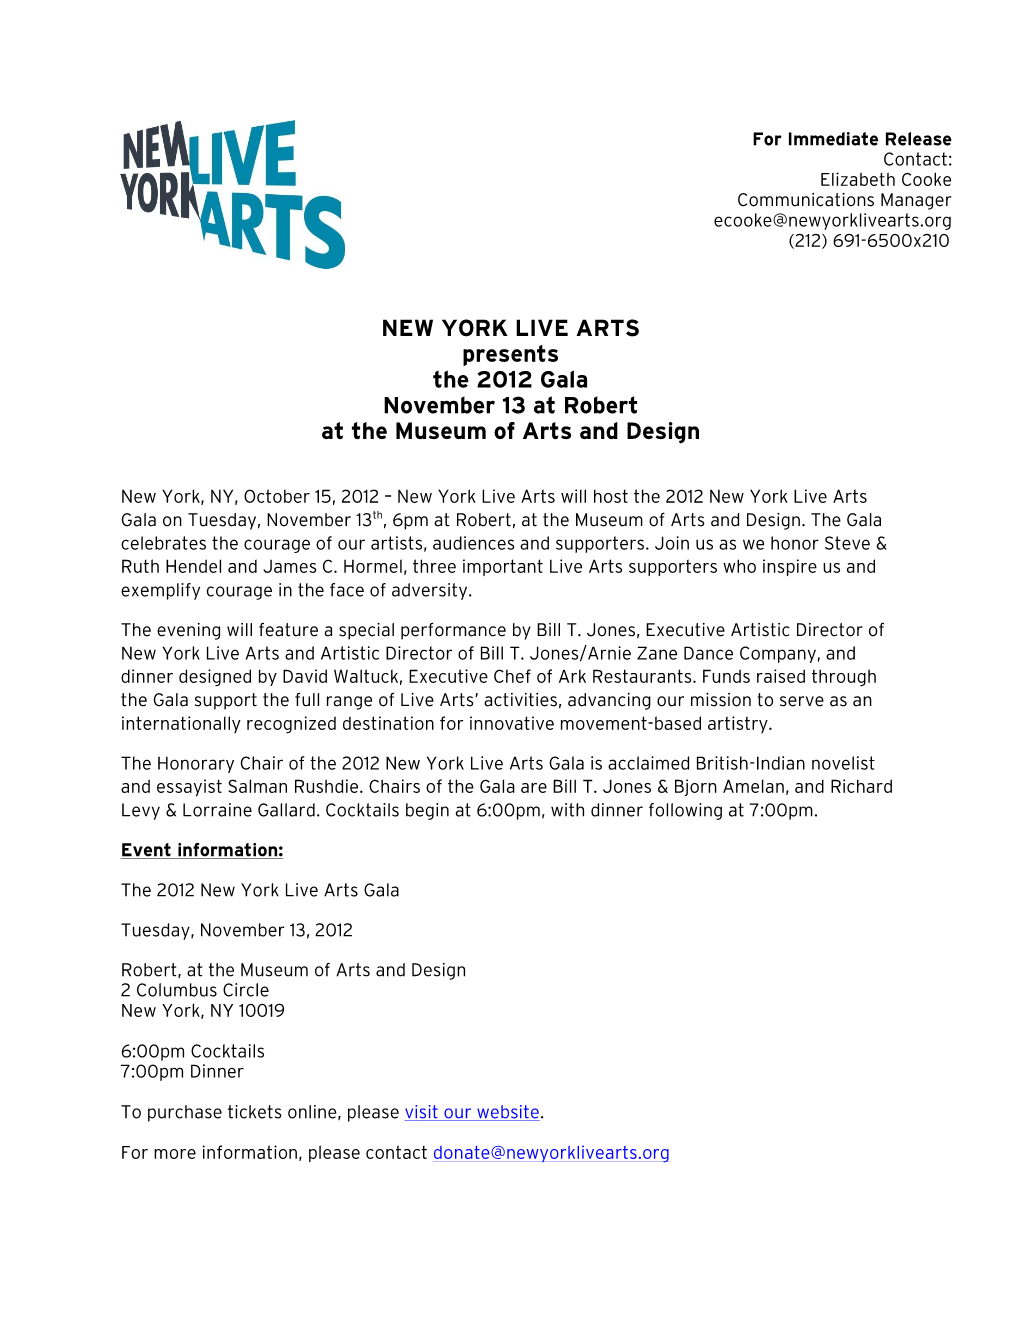 NEW YORK LIVE ARTS Presents the 2012 Gala November 13 at Robert at the Museum of Arts and Design